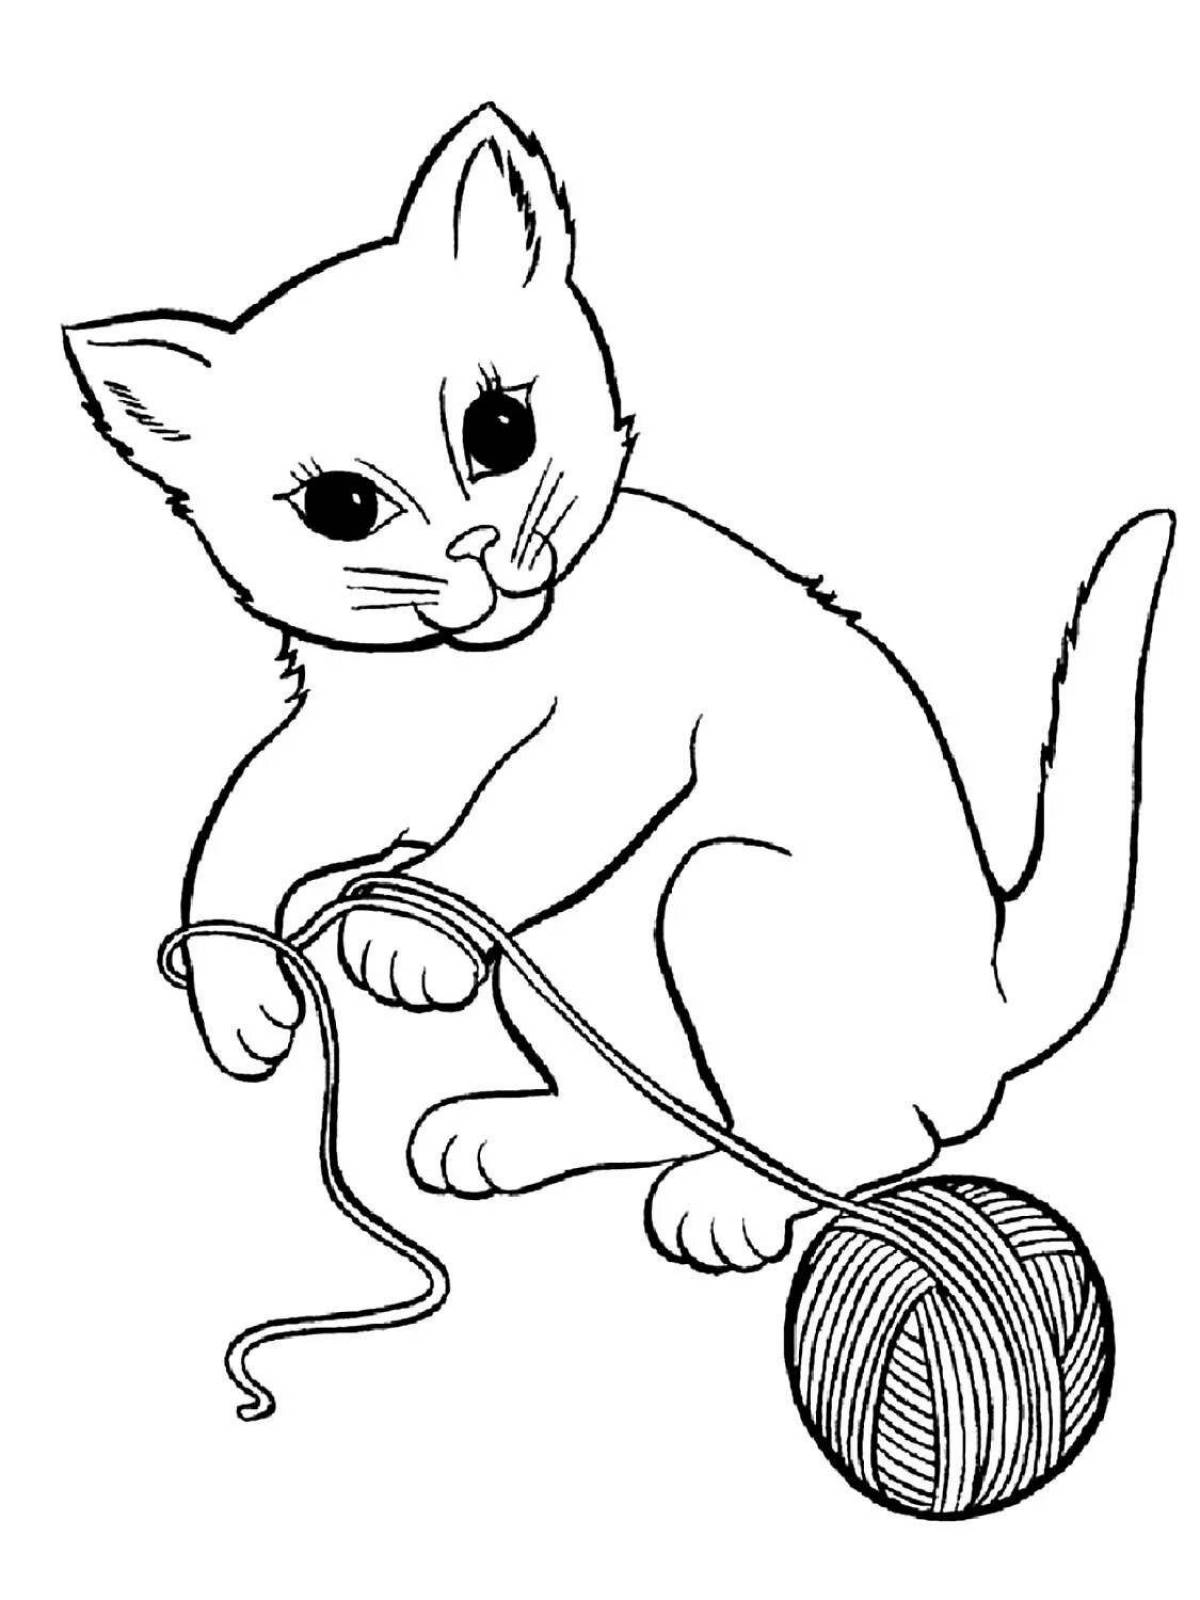 Креативный рисунок котенка